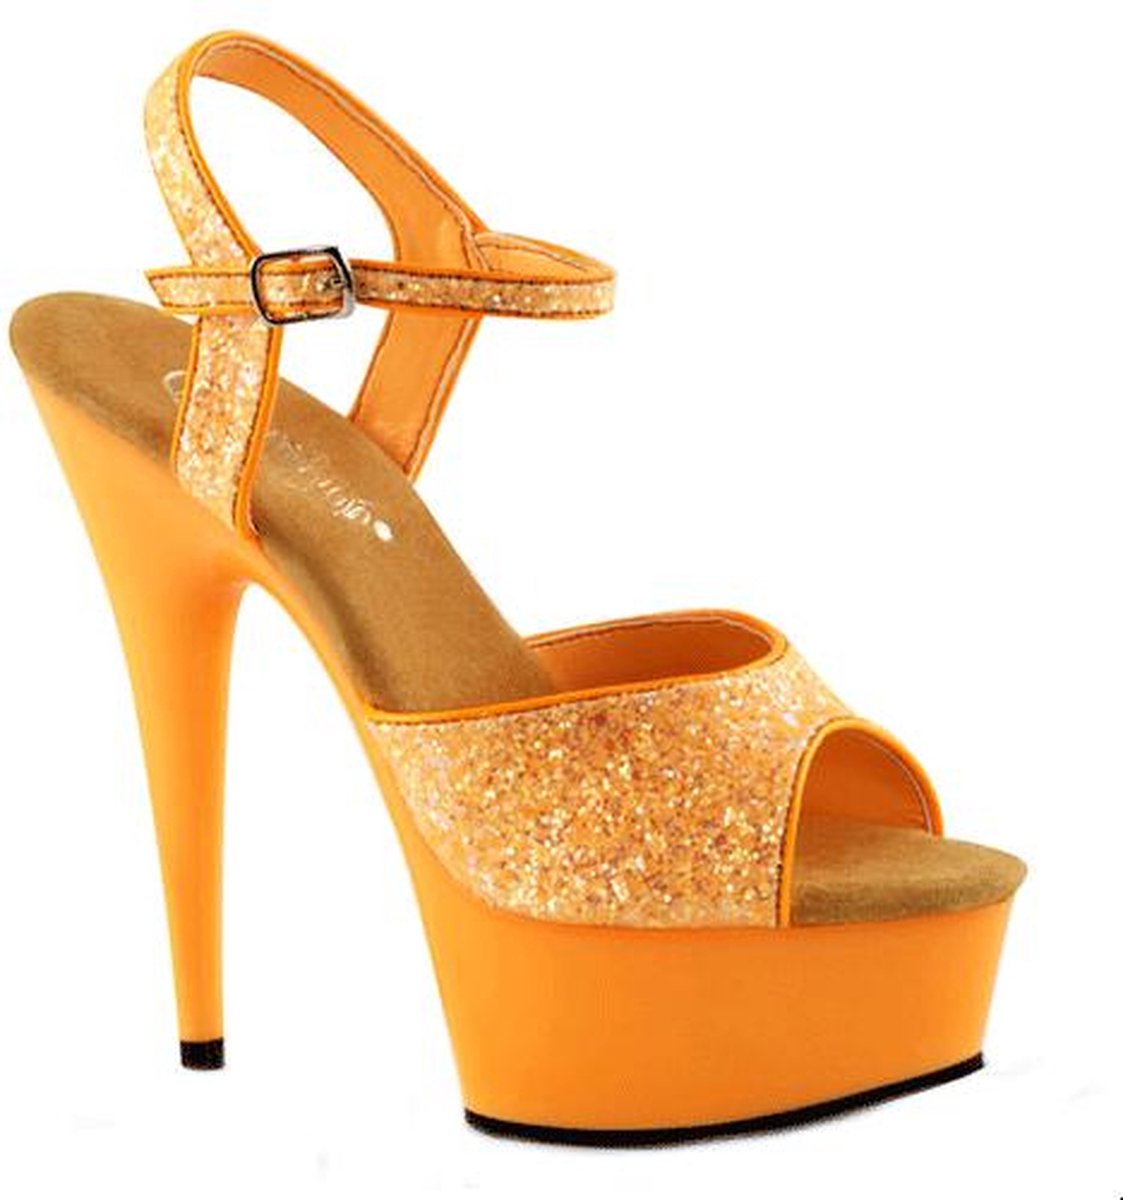 Neon oranje glitter sandalen Caydence 41 - Merkloos